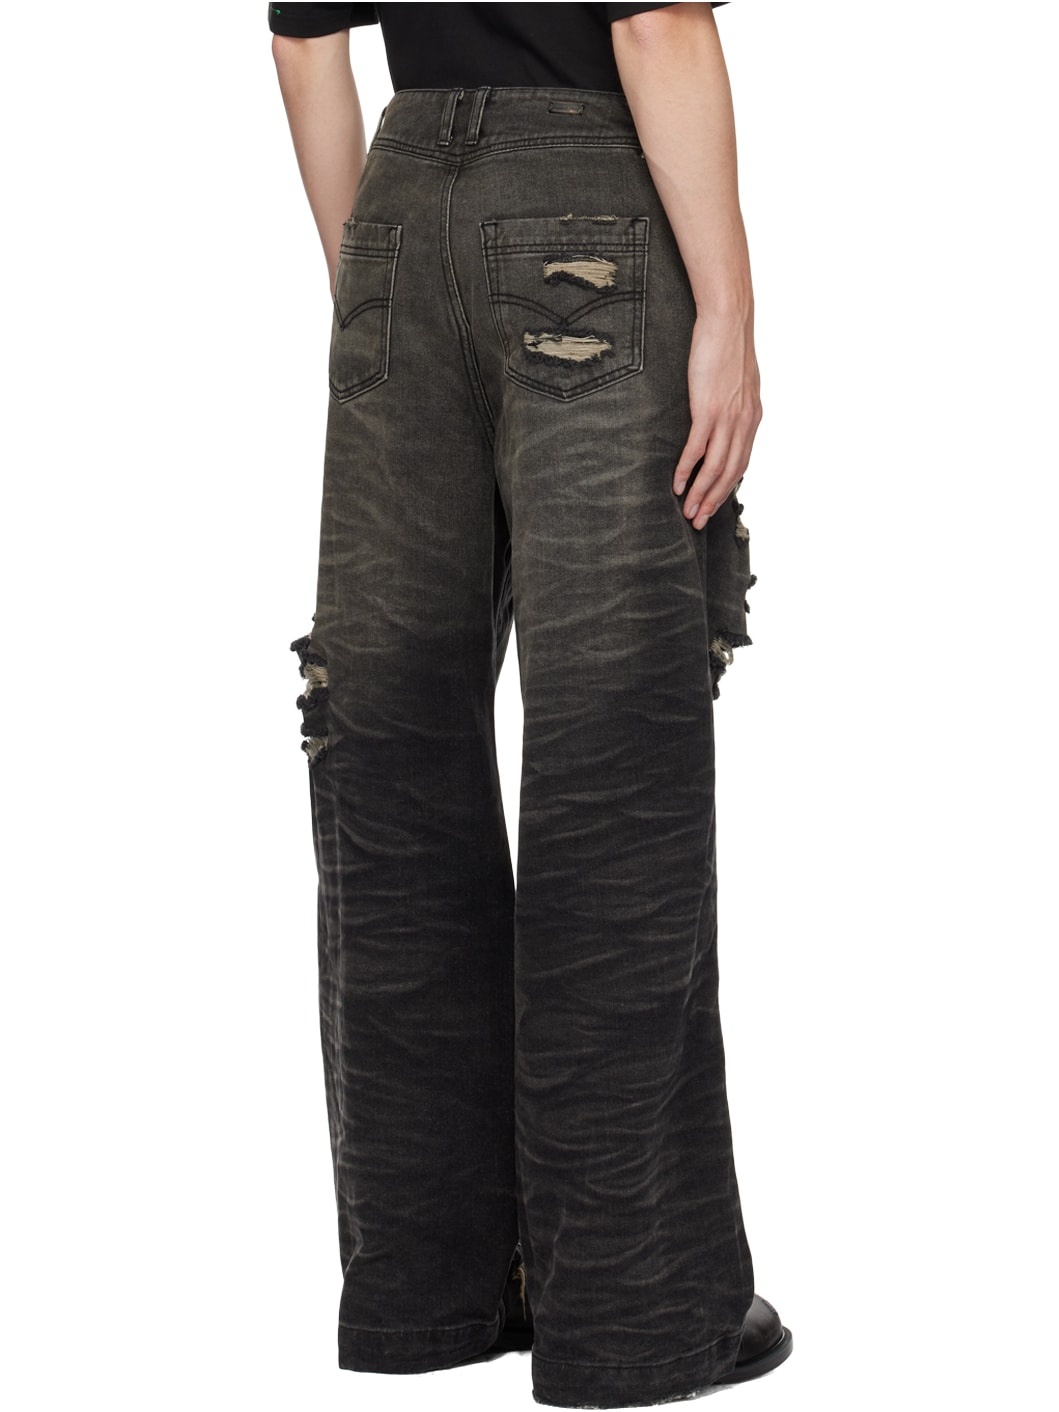 Black Distressed Jeans - 3